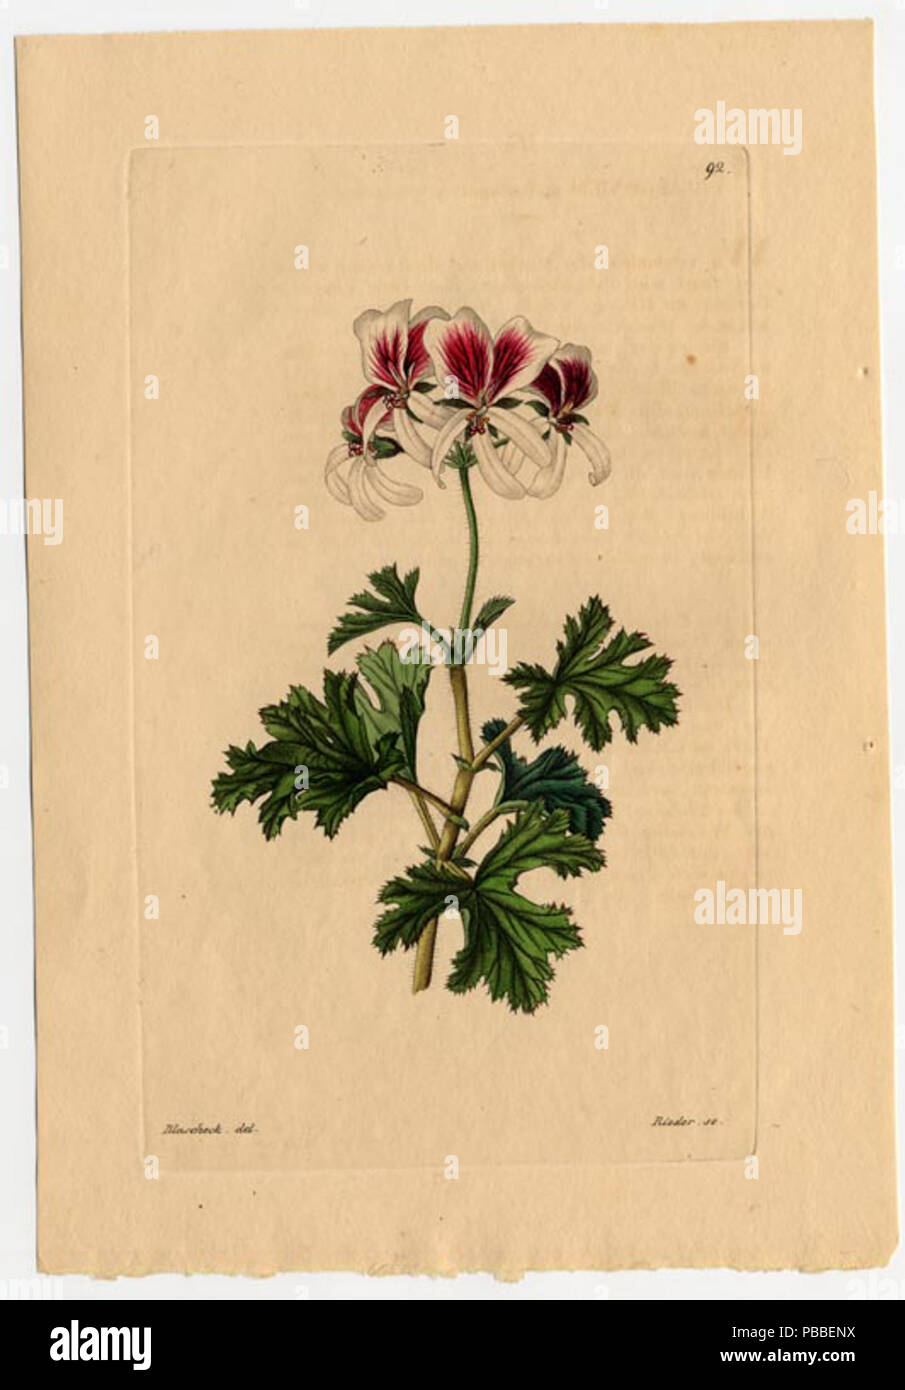 1177 Pelargonium 'Anomalum' Stock Photo